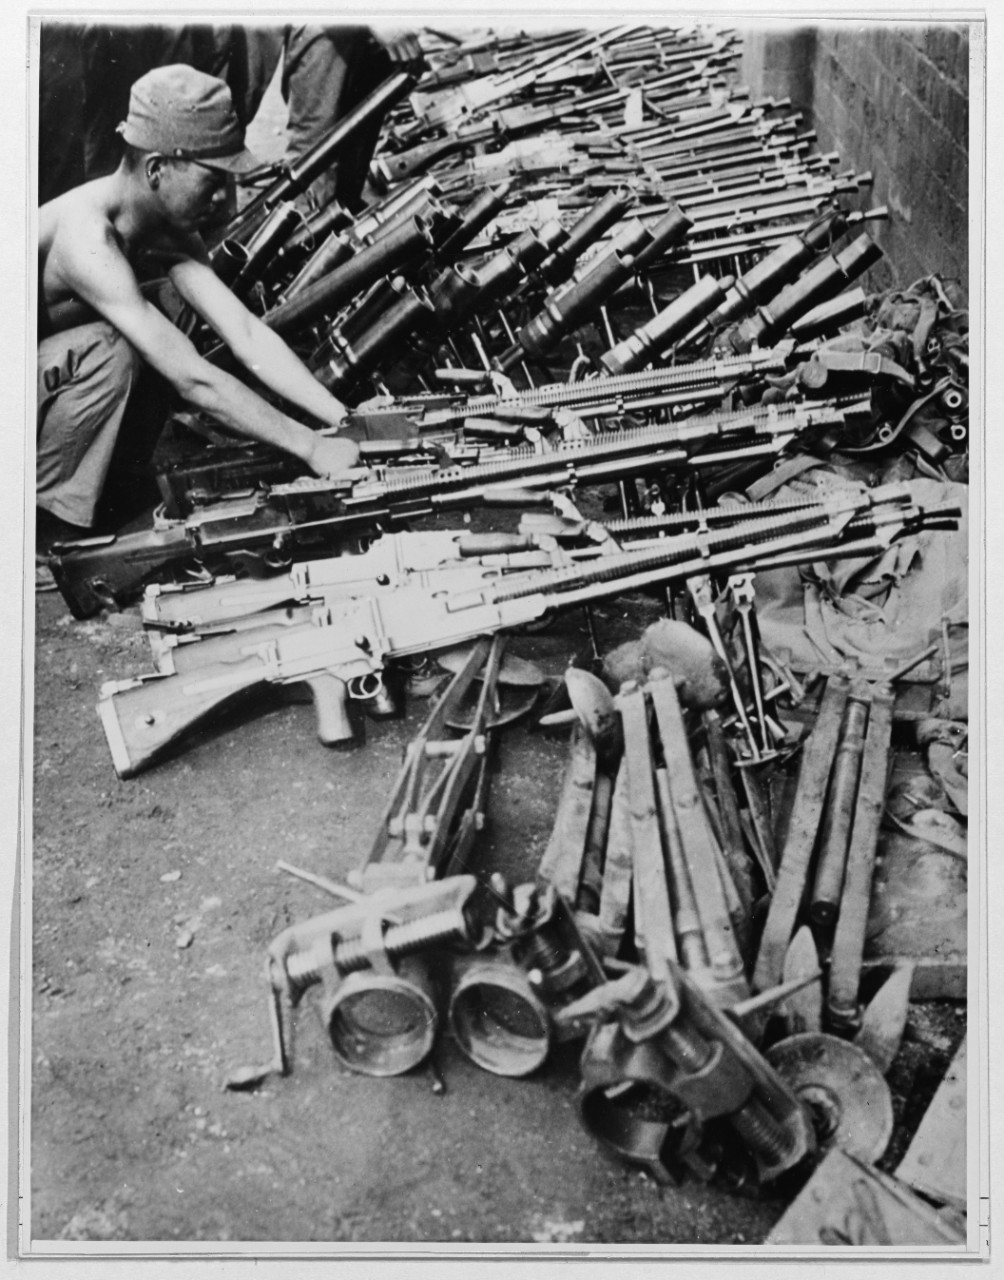 Arms cache, Tientsin, China.